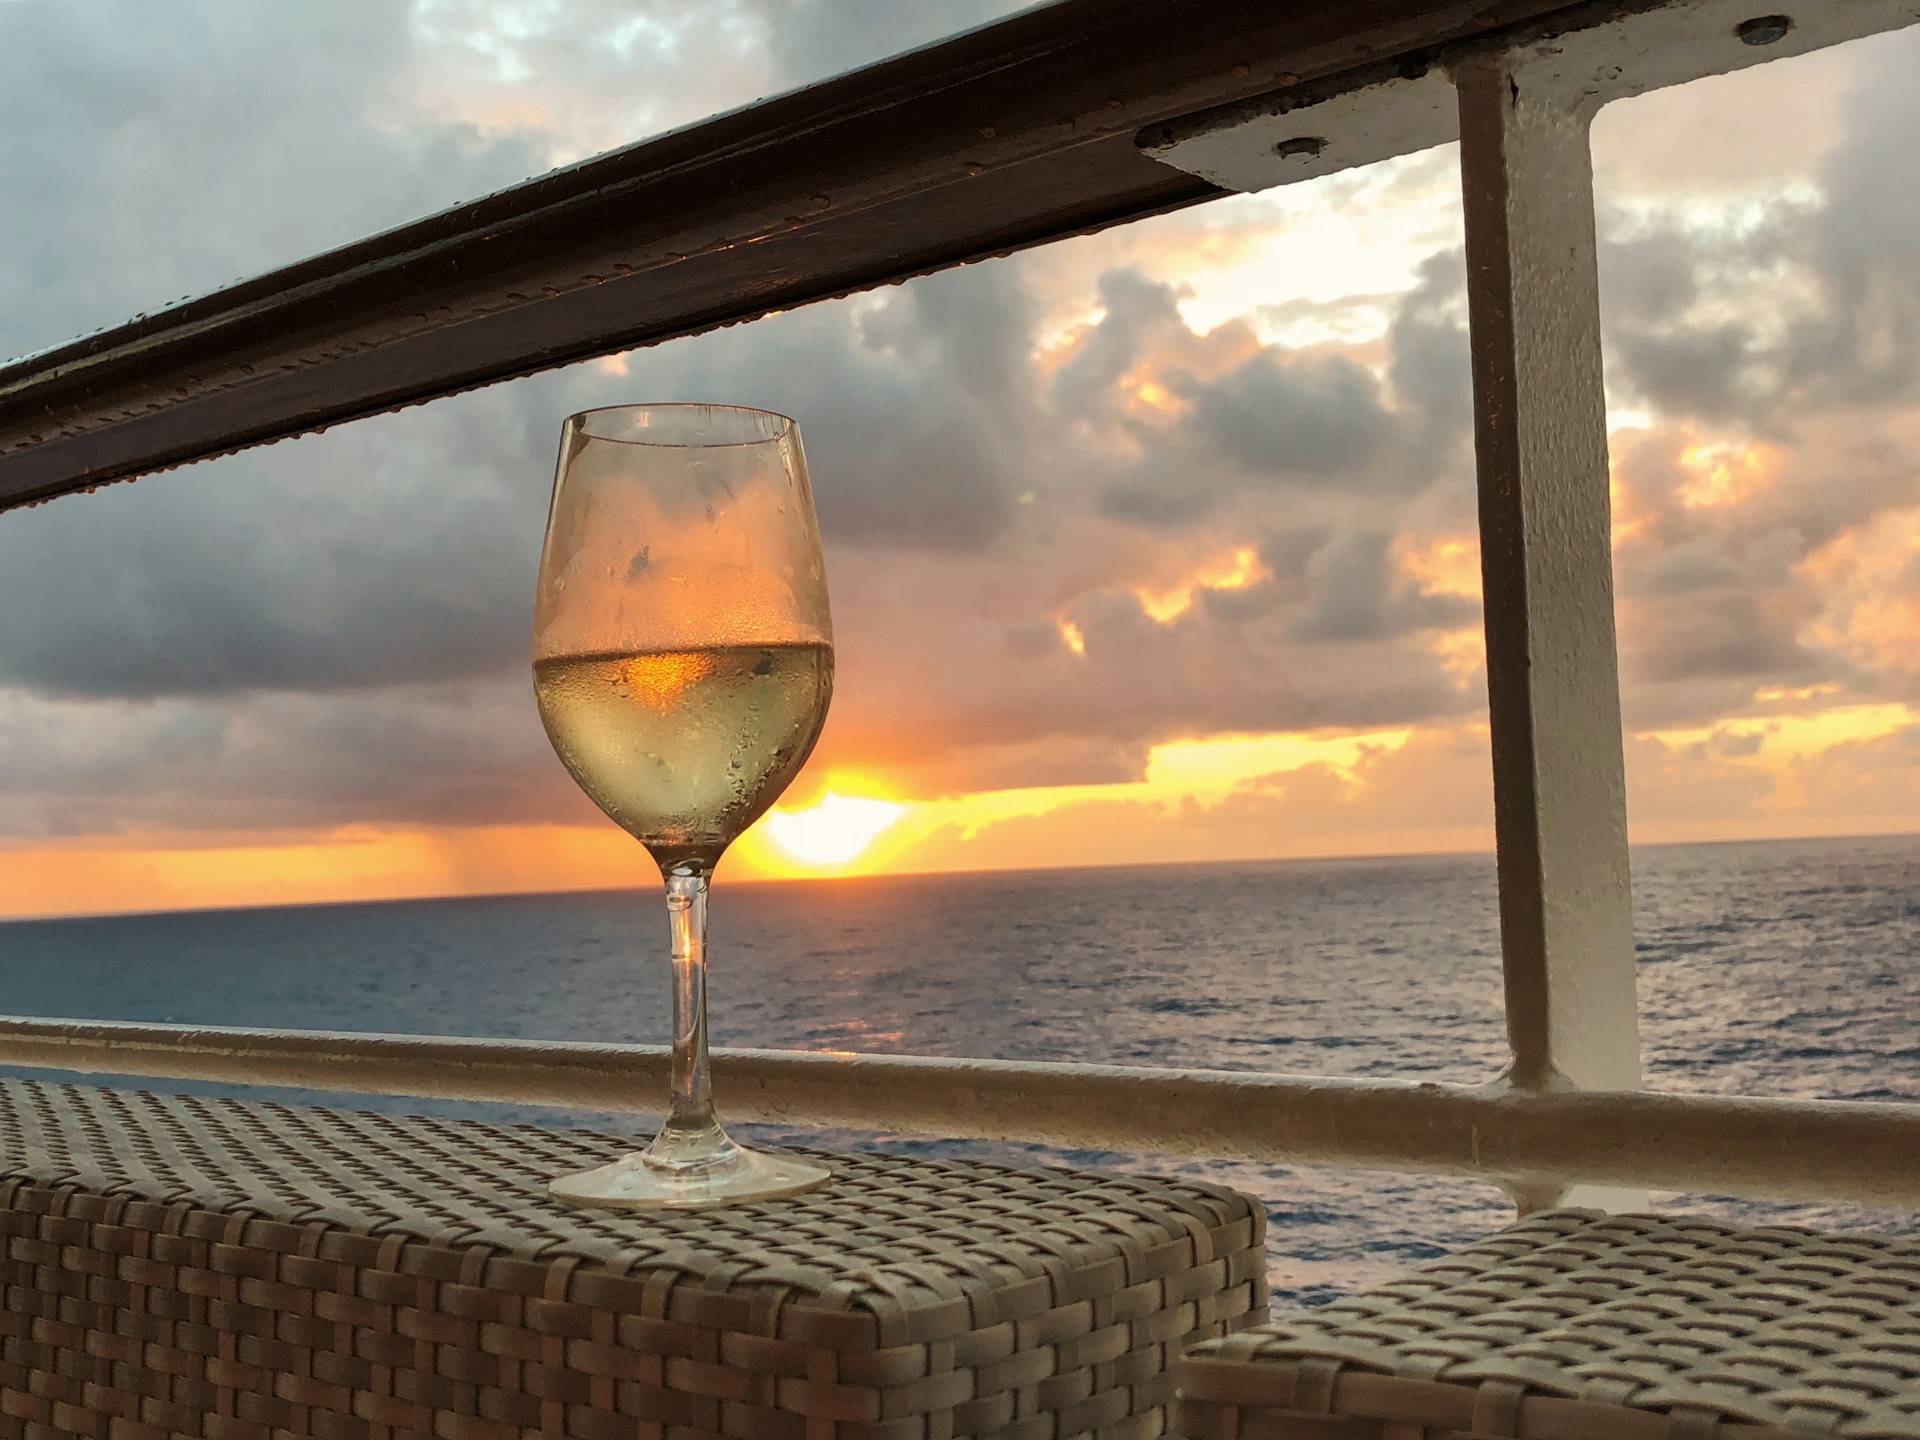 Glass of wine cruise ship